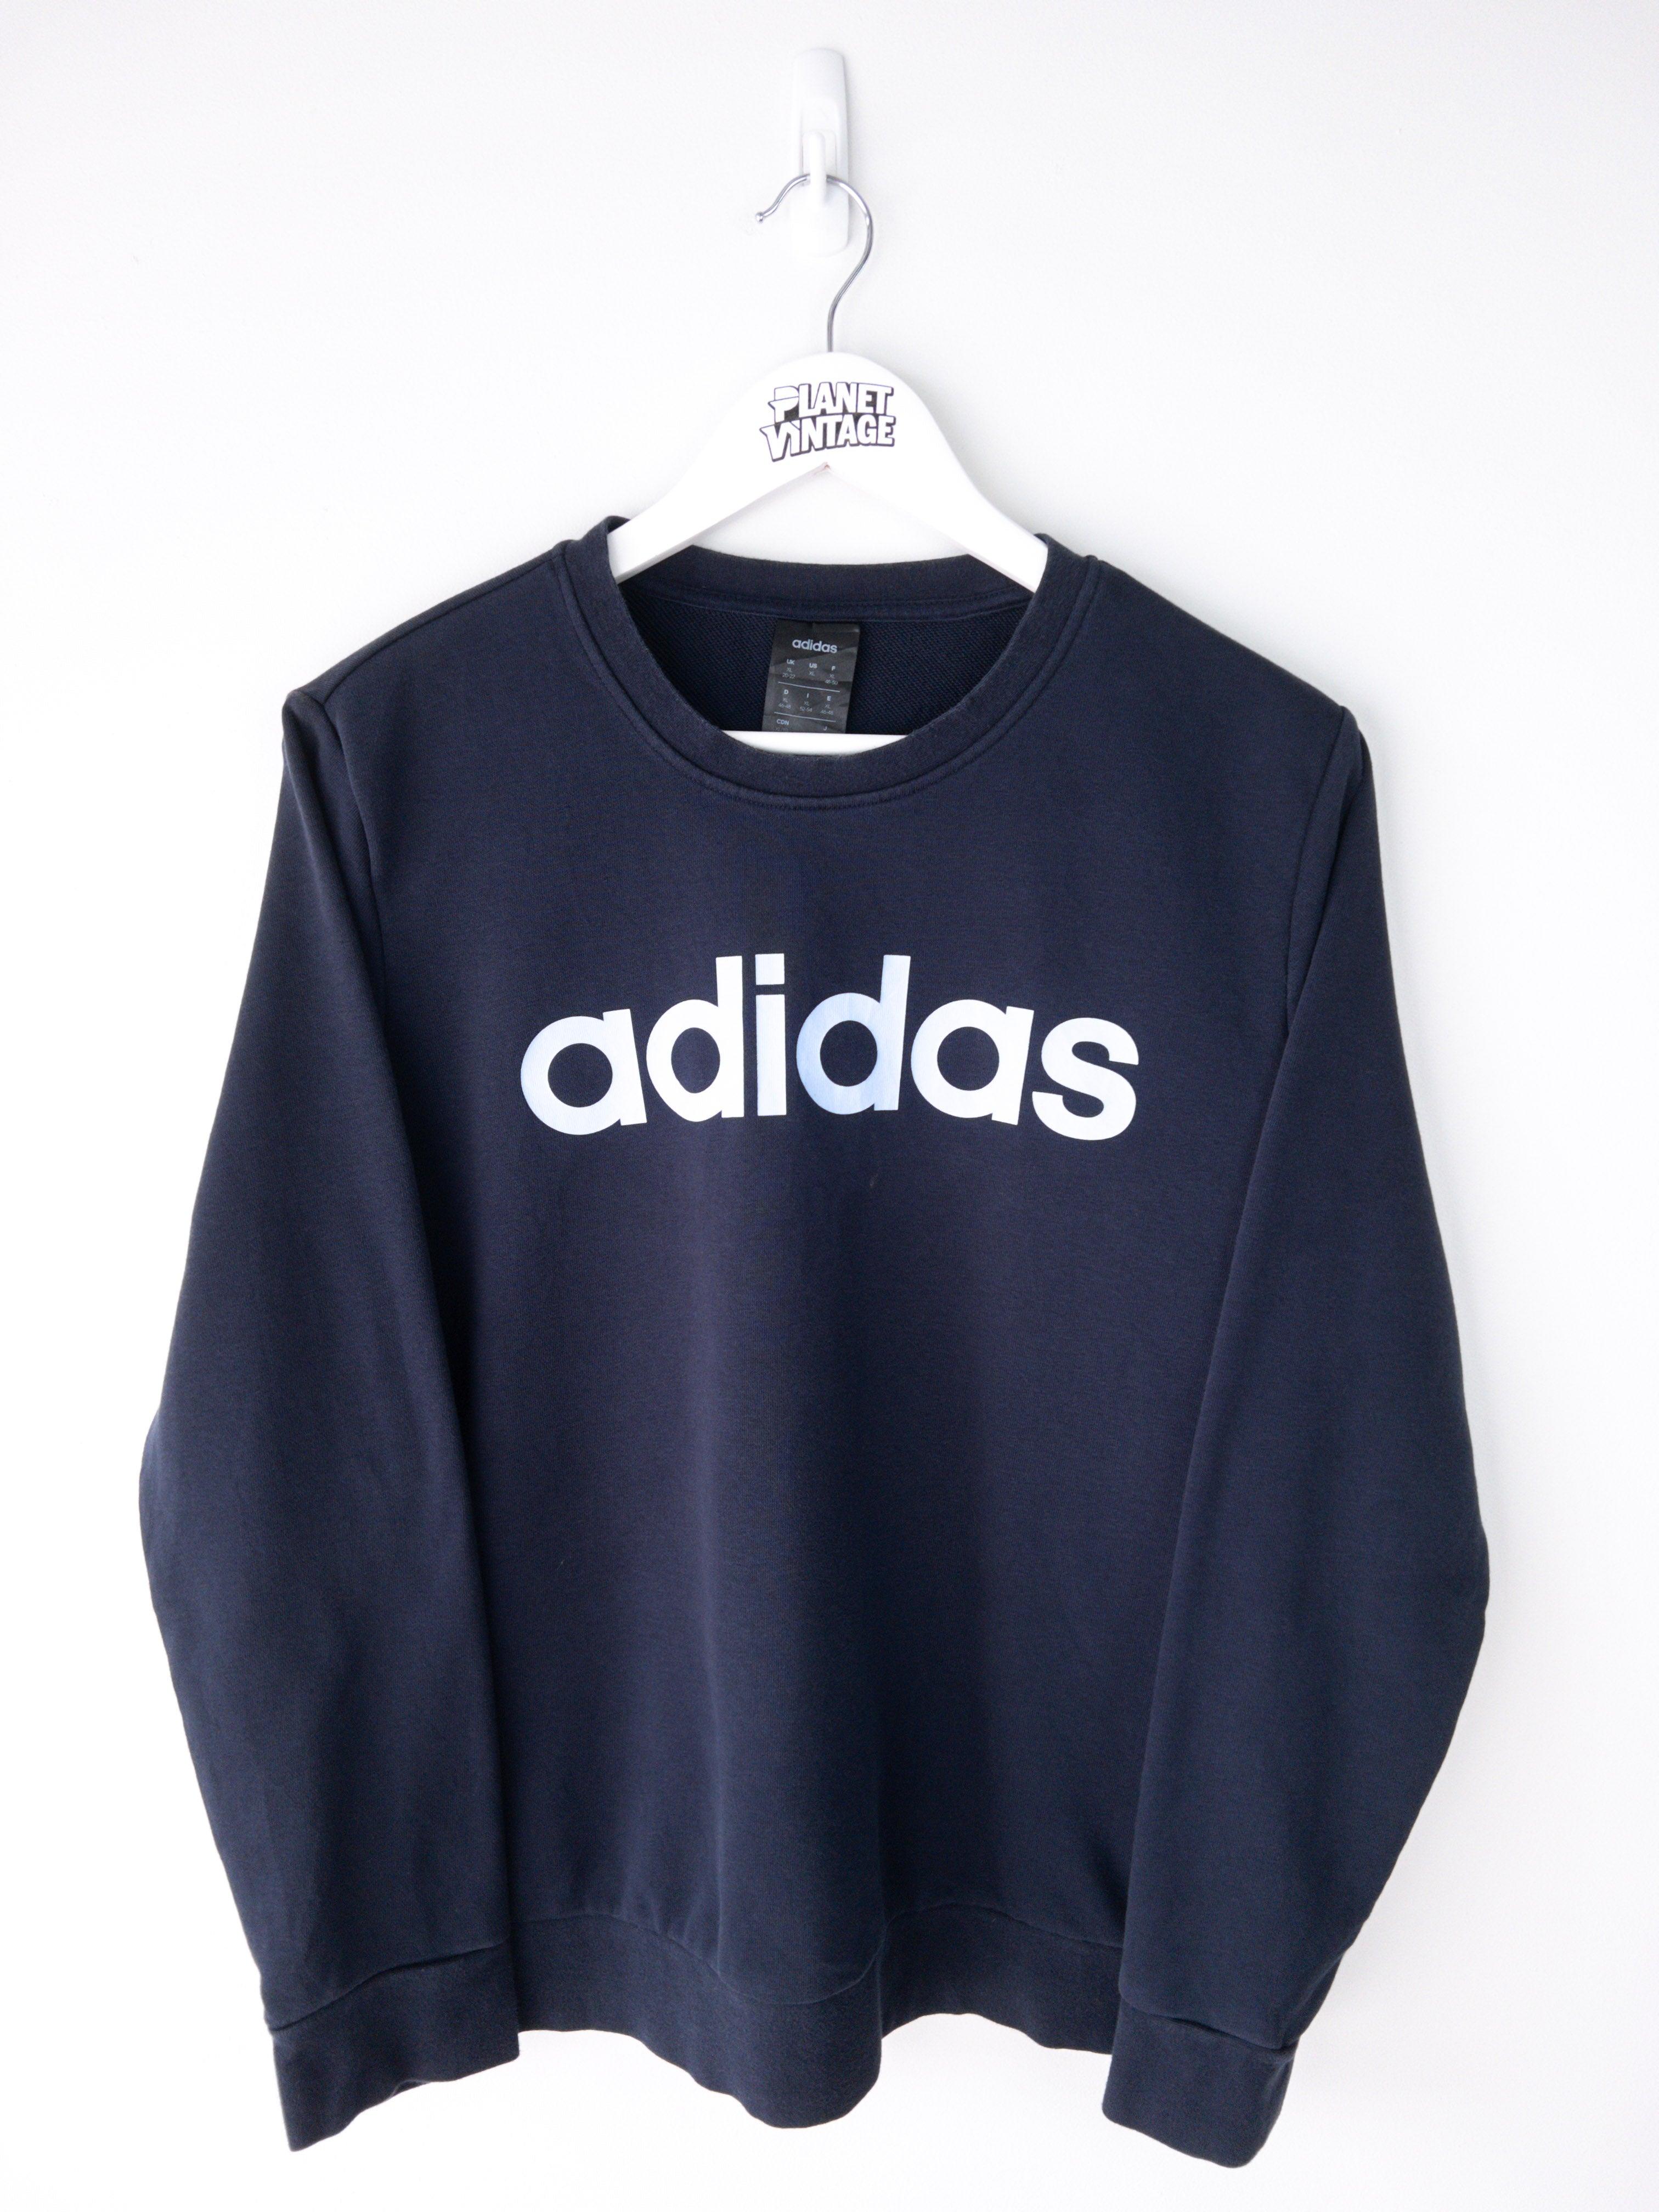 Adidas Sweatshirt (L) - Planet Vintage Store